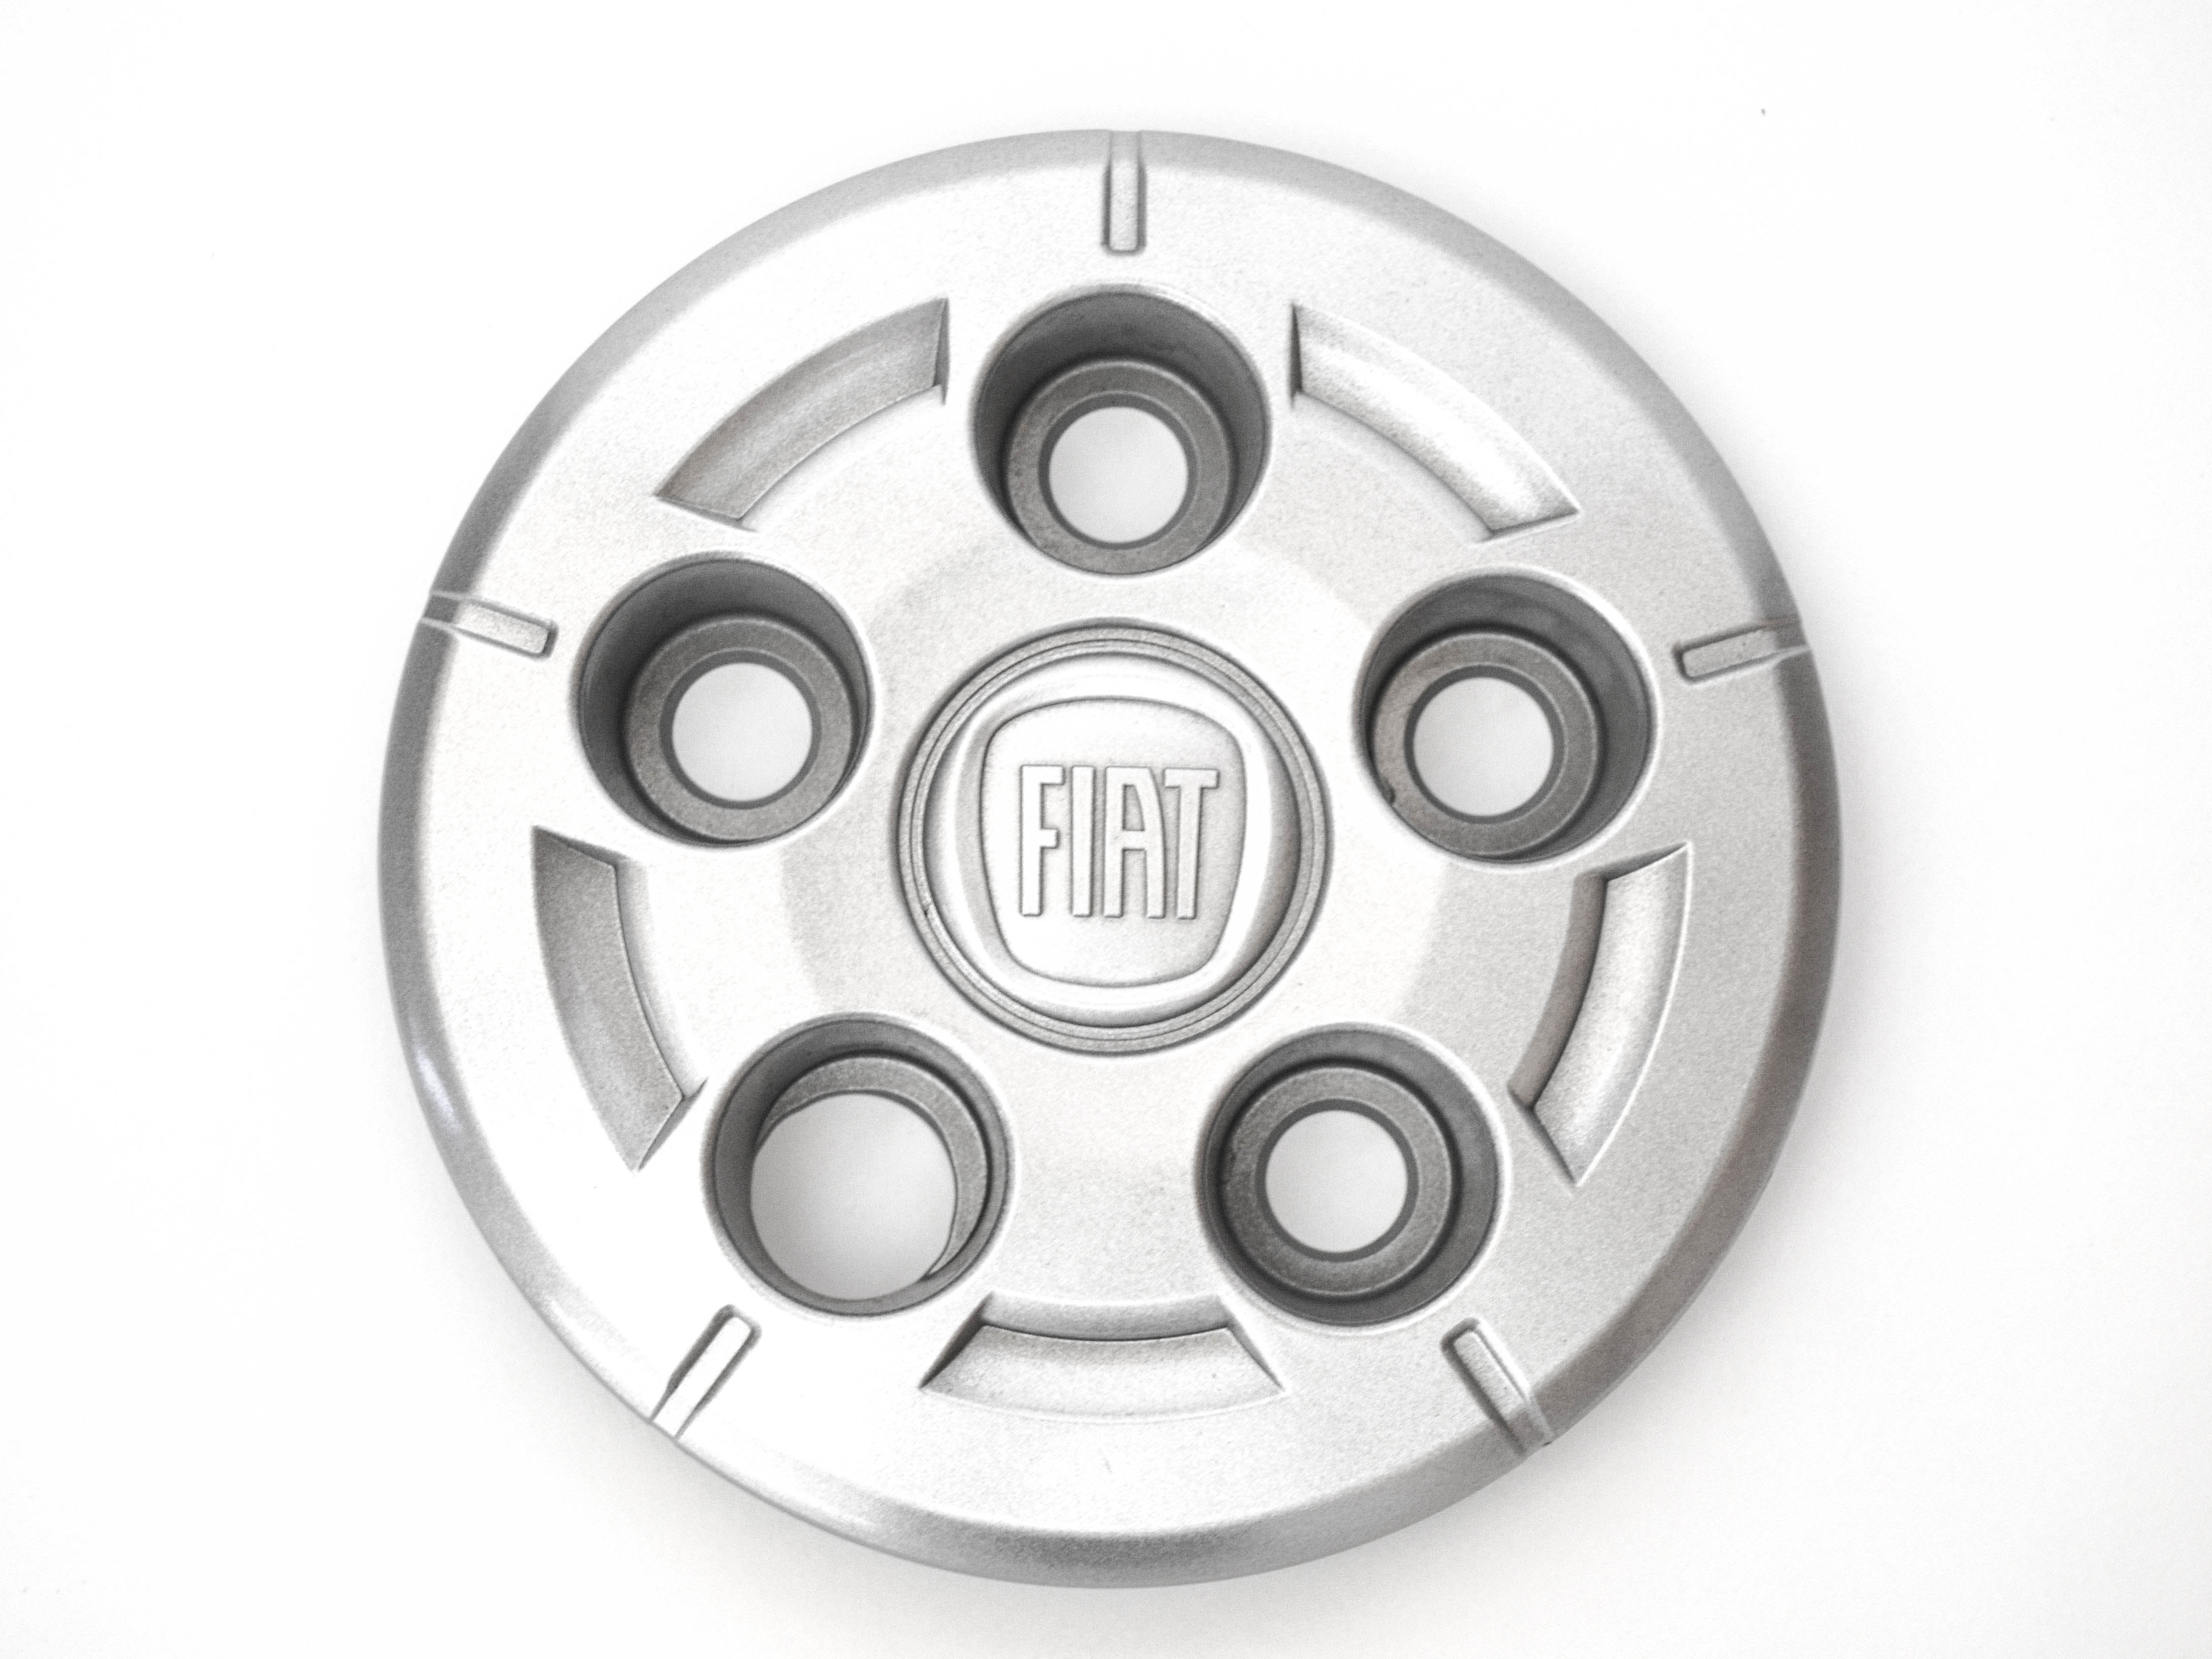 4 pieces Wheel Cover Fiat Ducato for 16 inch steel rims